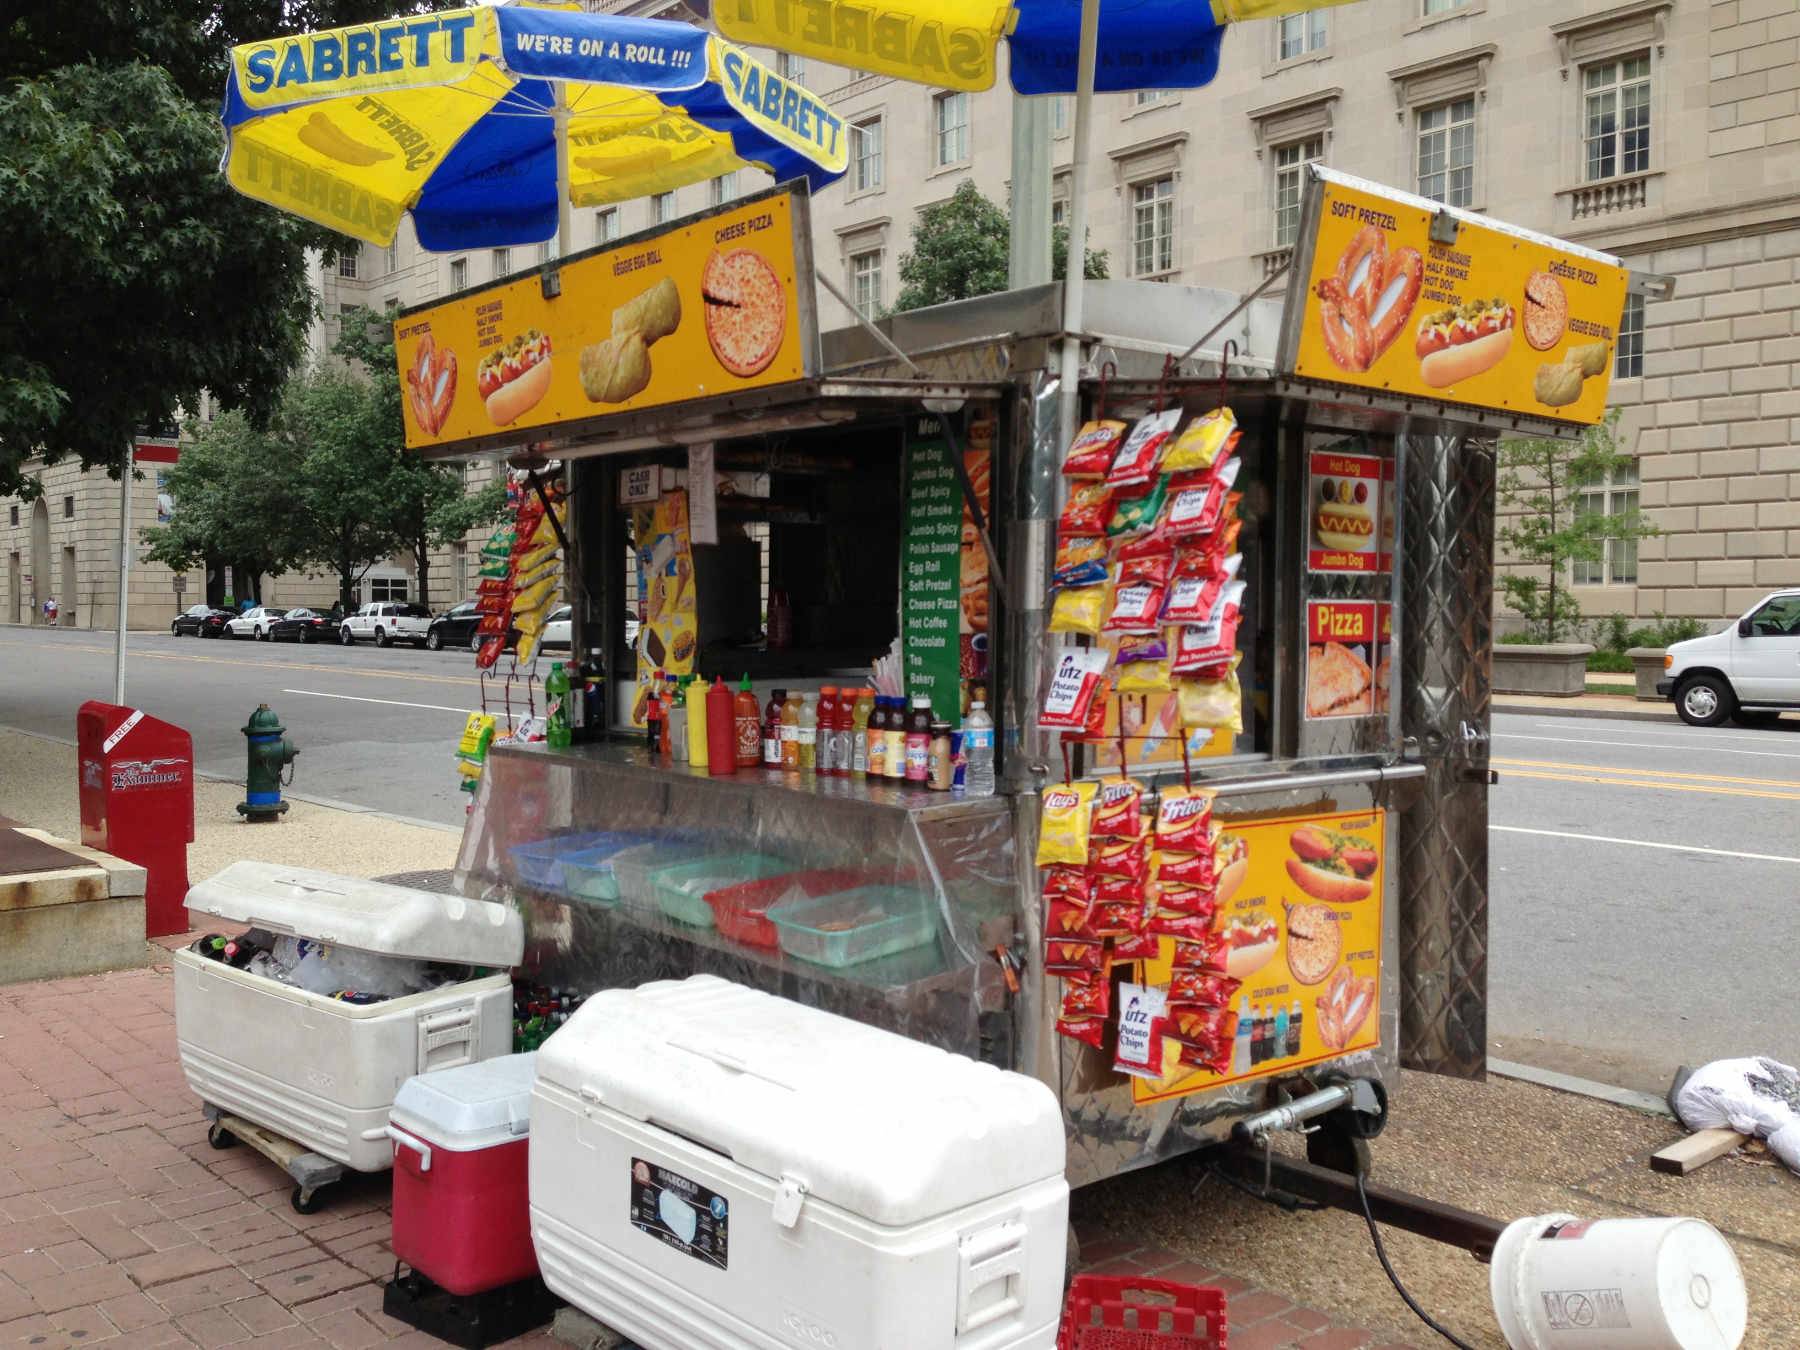 A mobile food stall